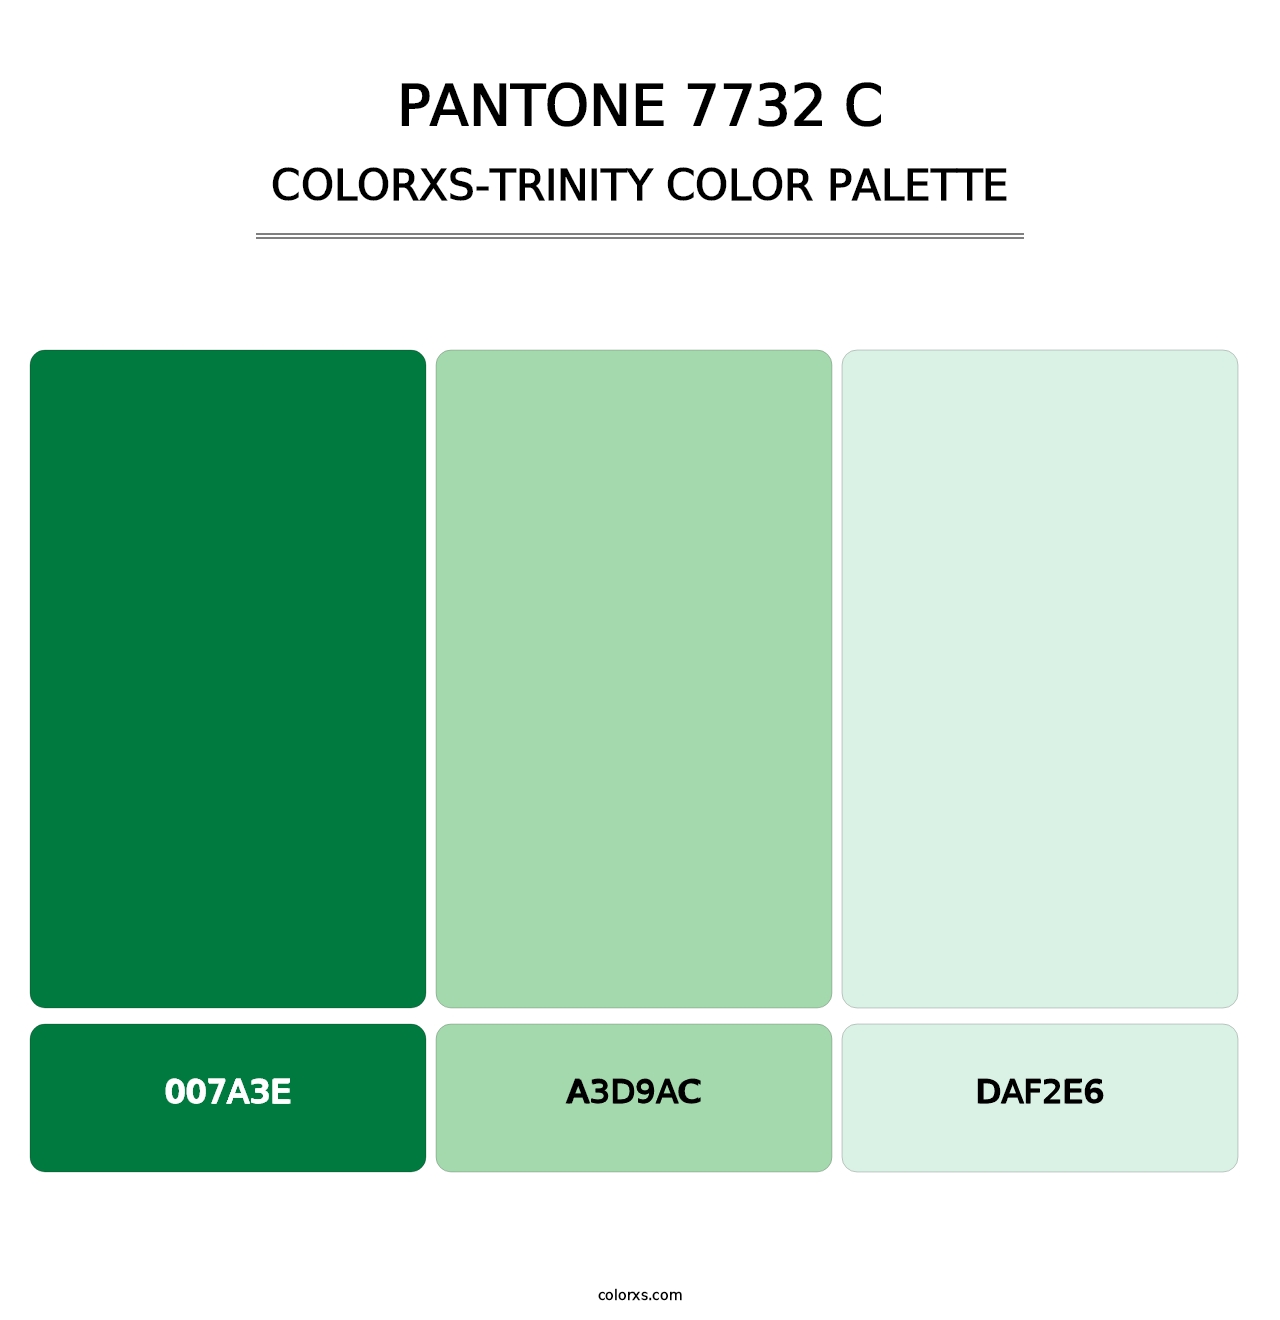 PANTONE 7732 C - Colorxs Trinity Palette